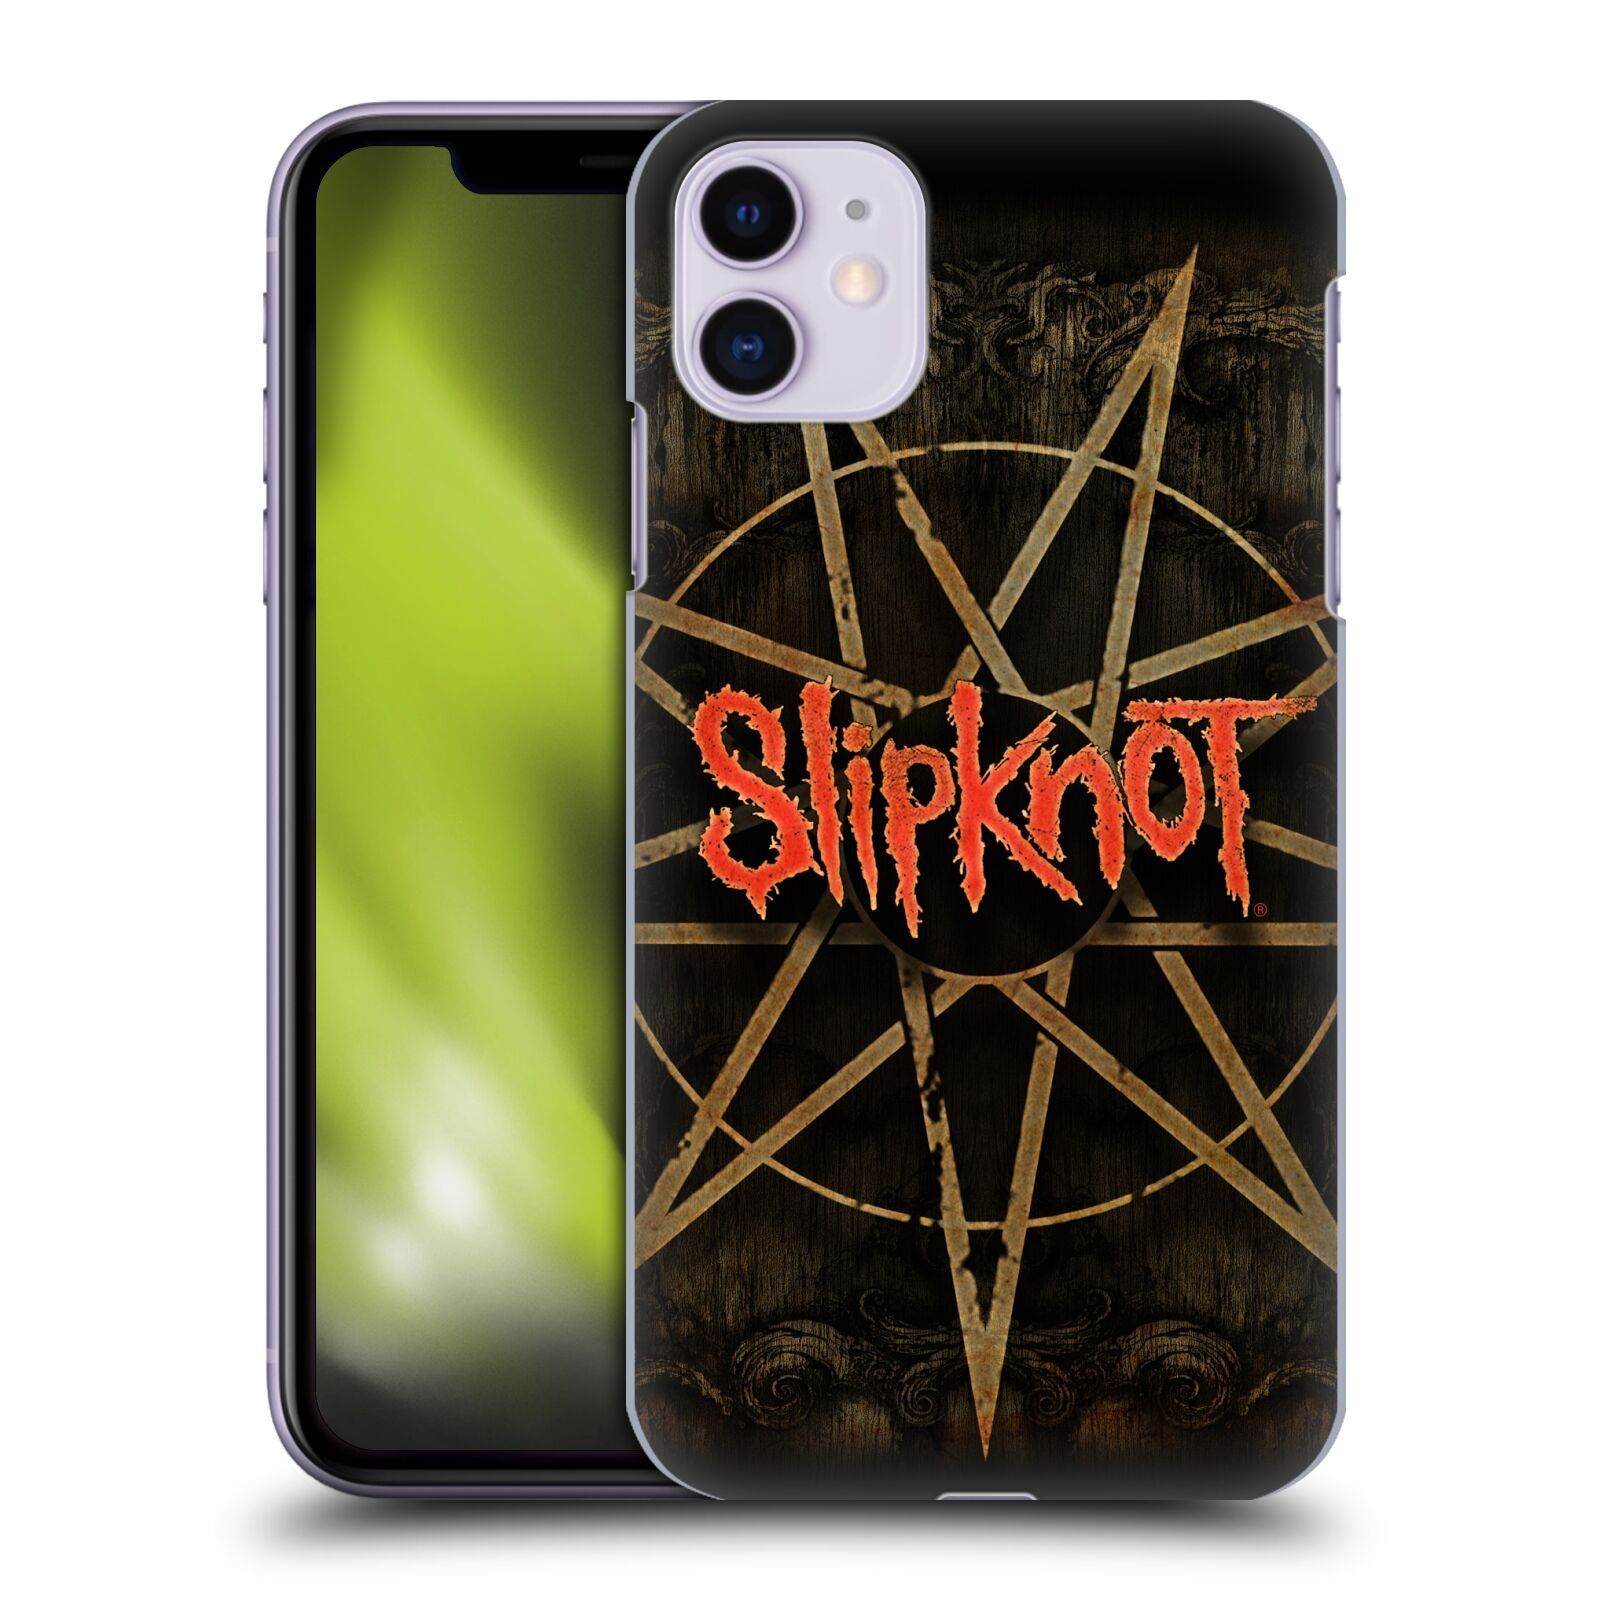 Plastové pouzdro na mobil Apple iPhone 11 - Head Case - Slipknot - Znak